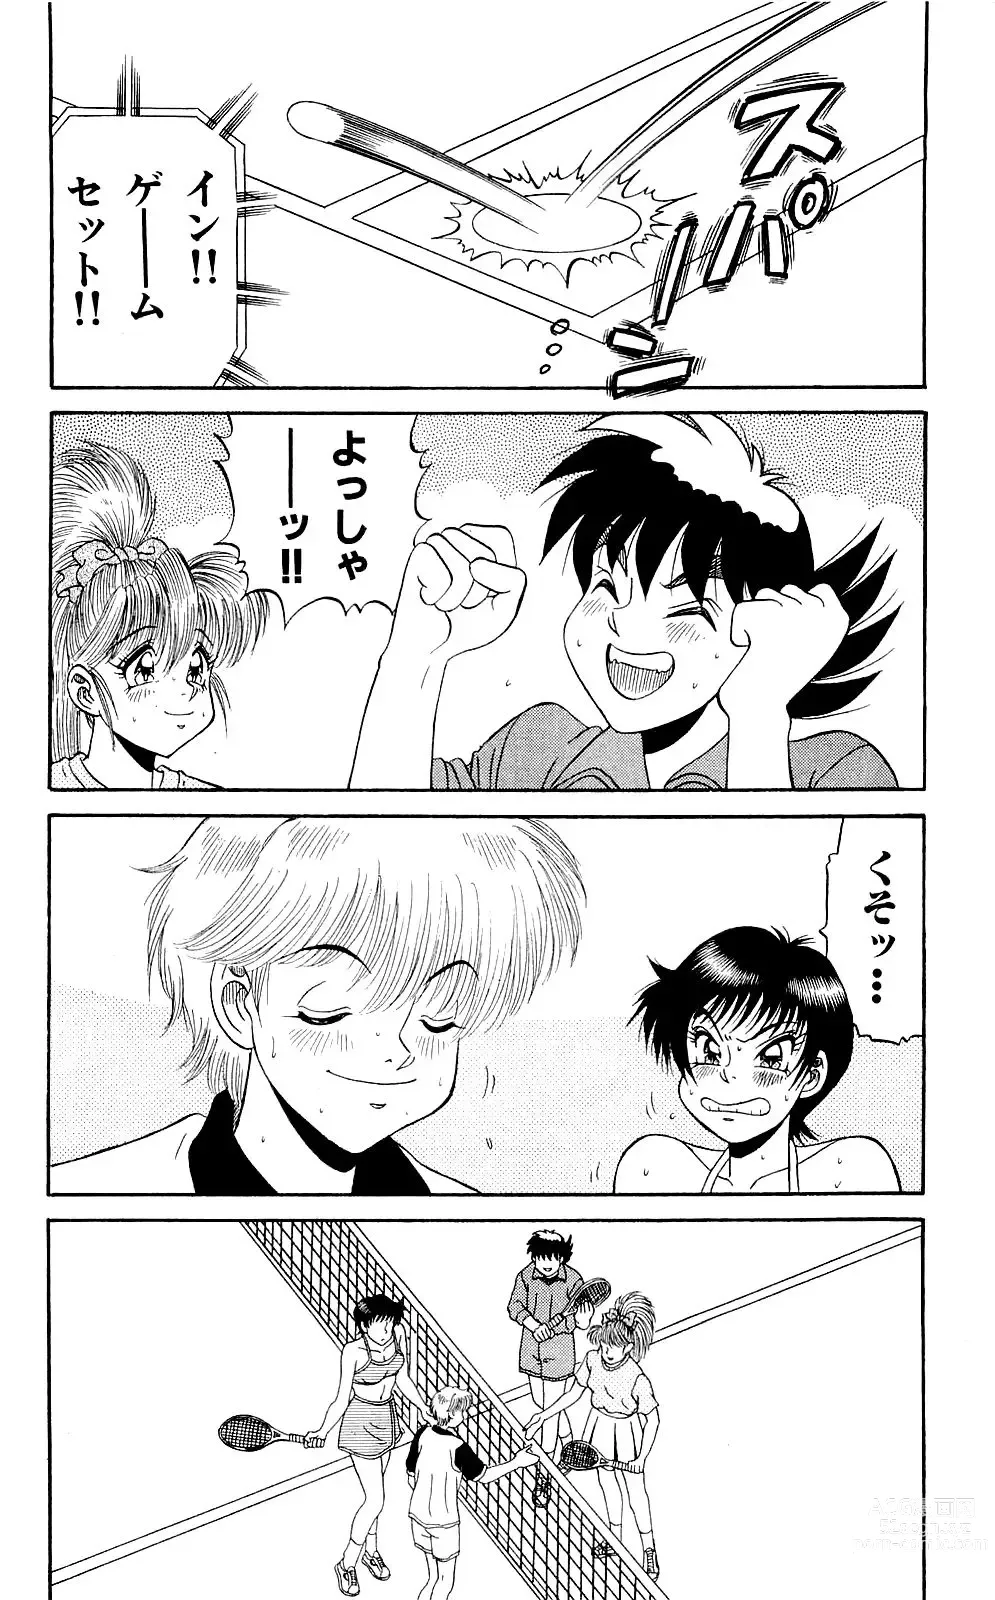 Page 180 of manga Orette Piyoritan 07